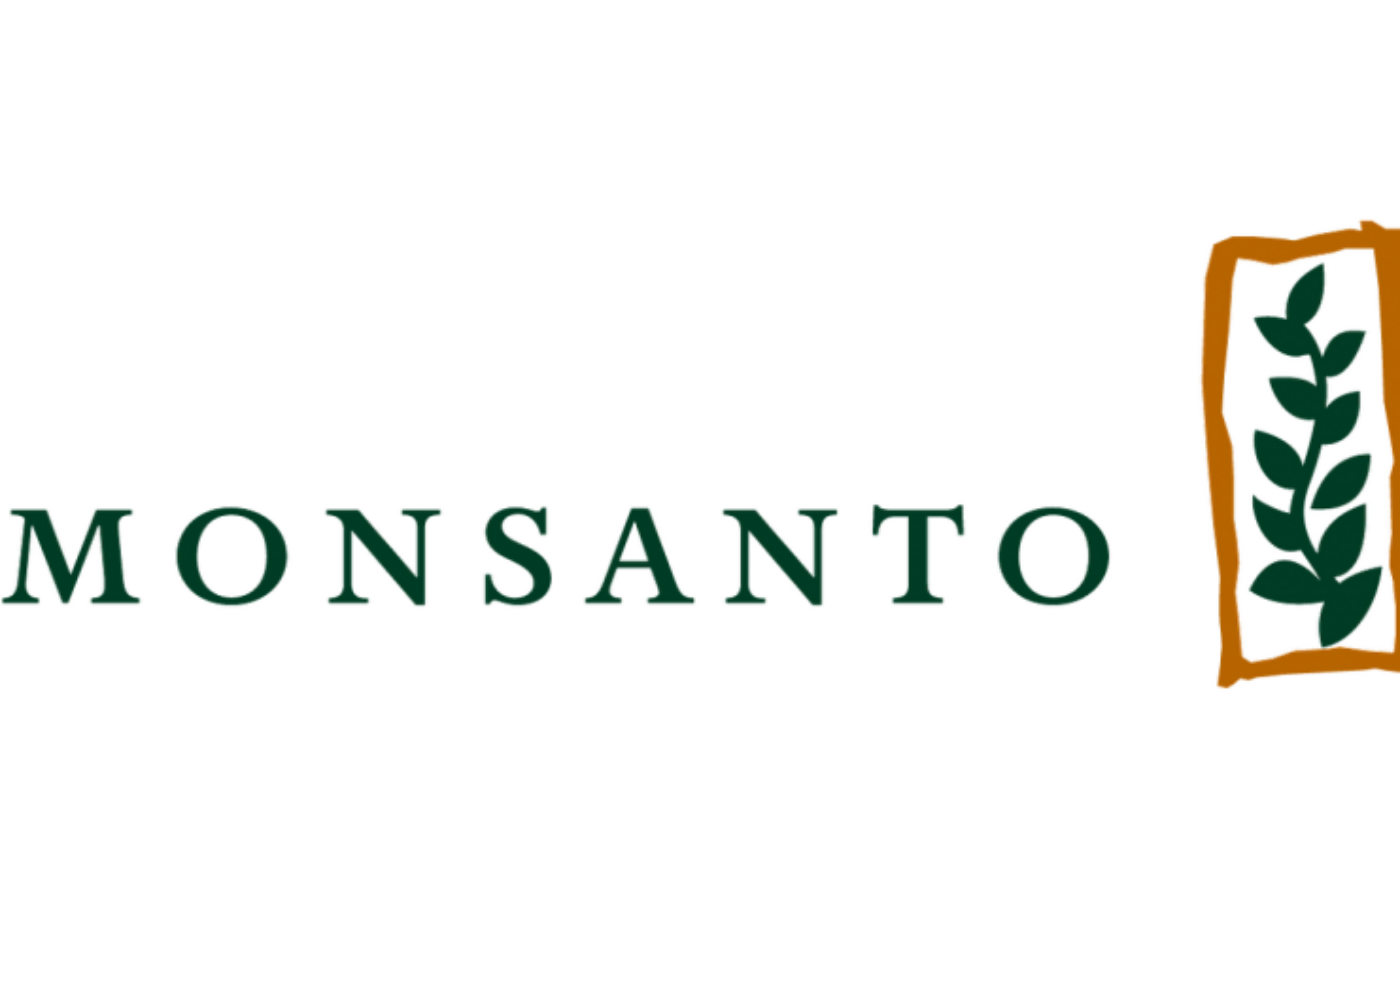 Monsanto-logo